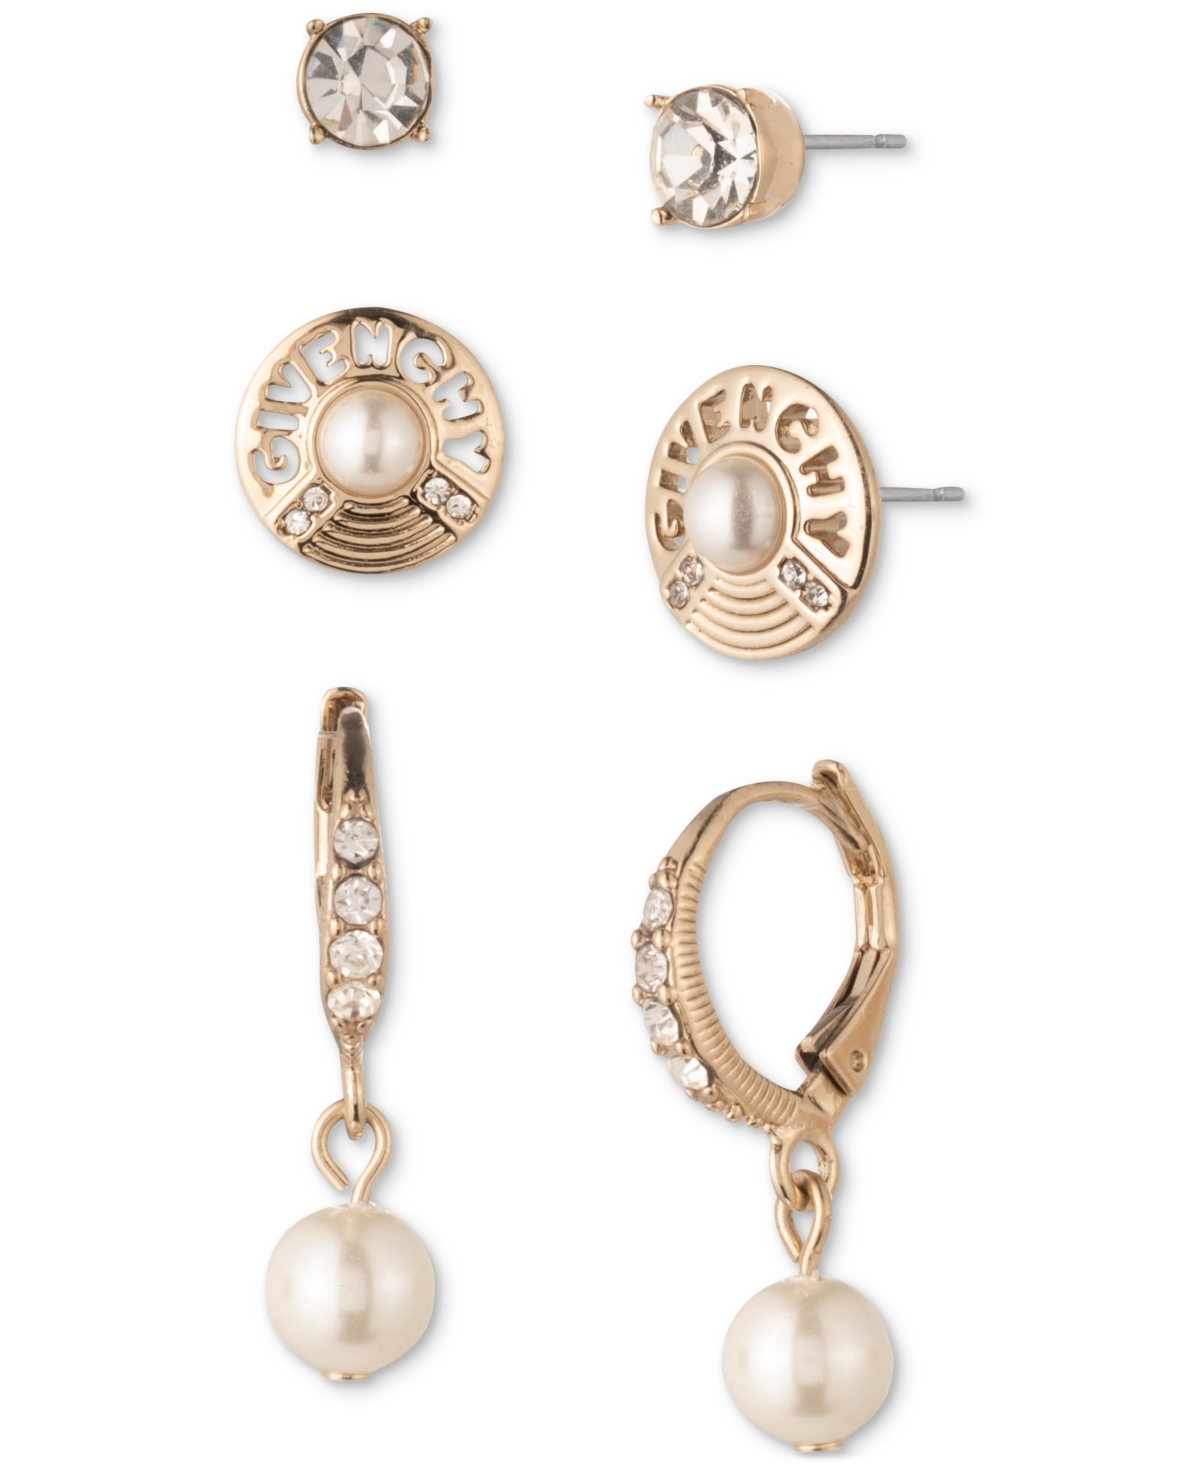 Gold-Tone 3-Pc. Set Pave, Imitation Pearl & Logo Earrings - White